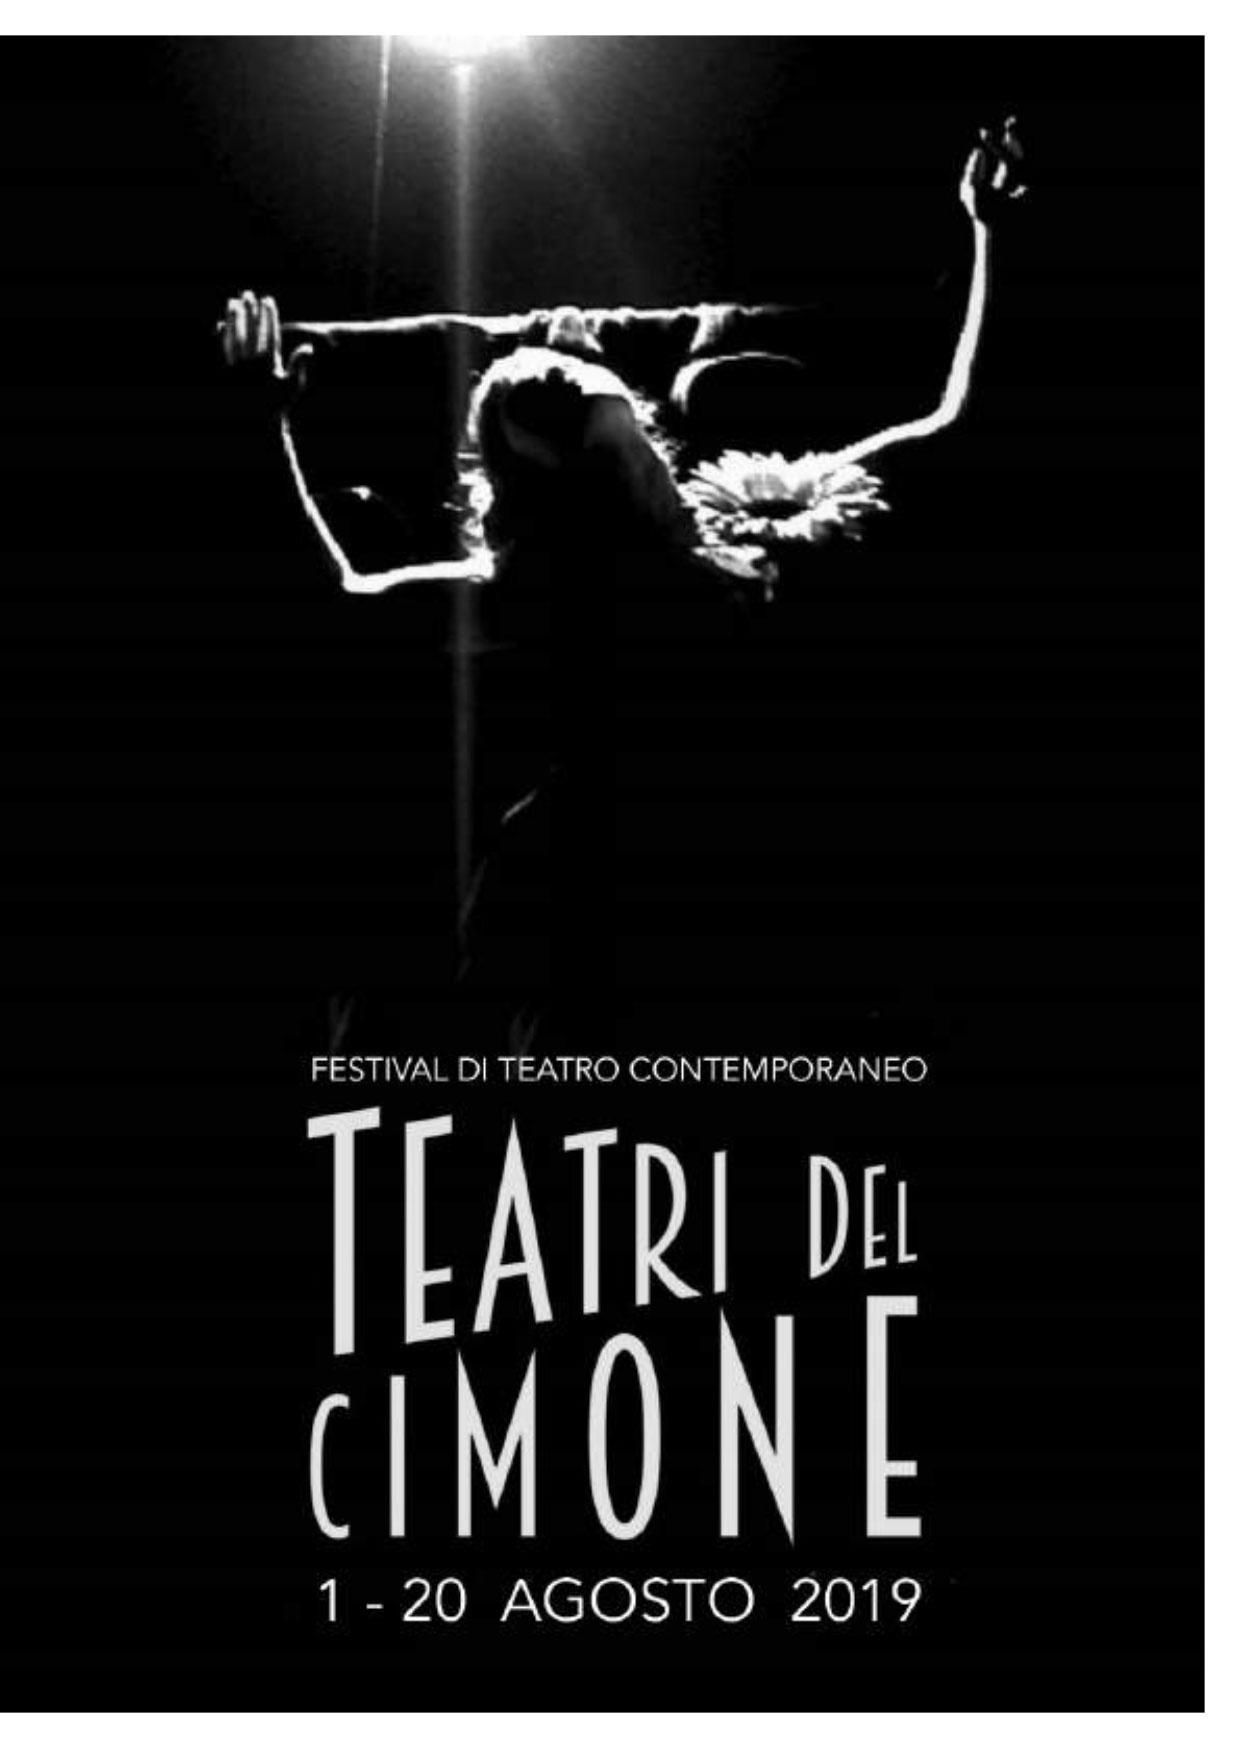 Teatri del Cimone 2019 1